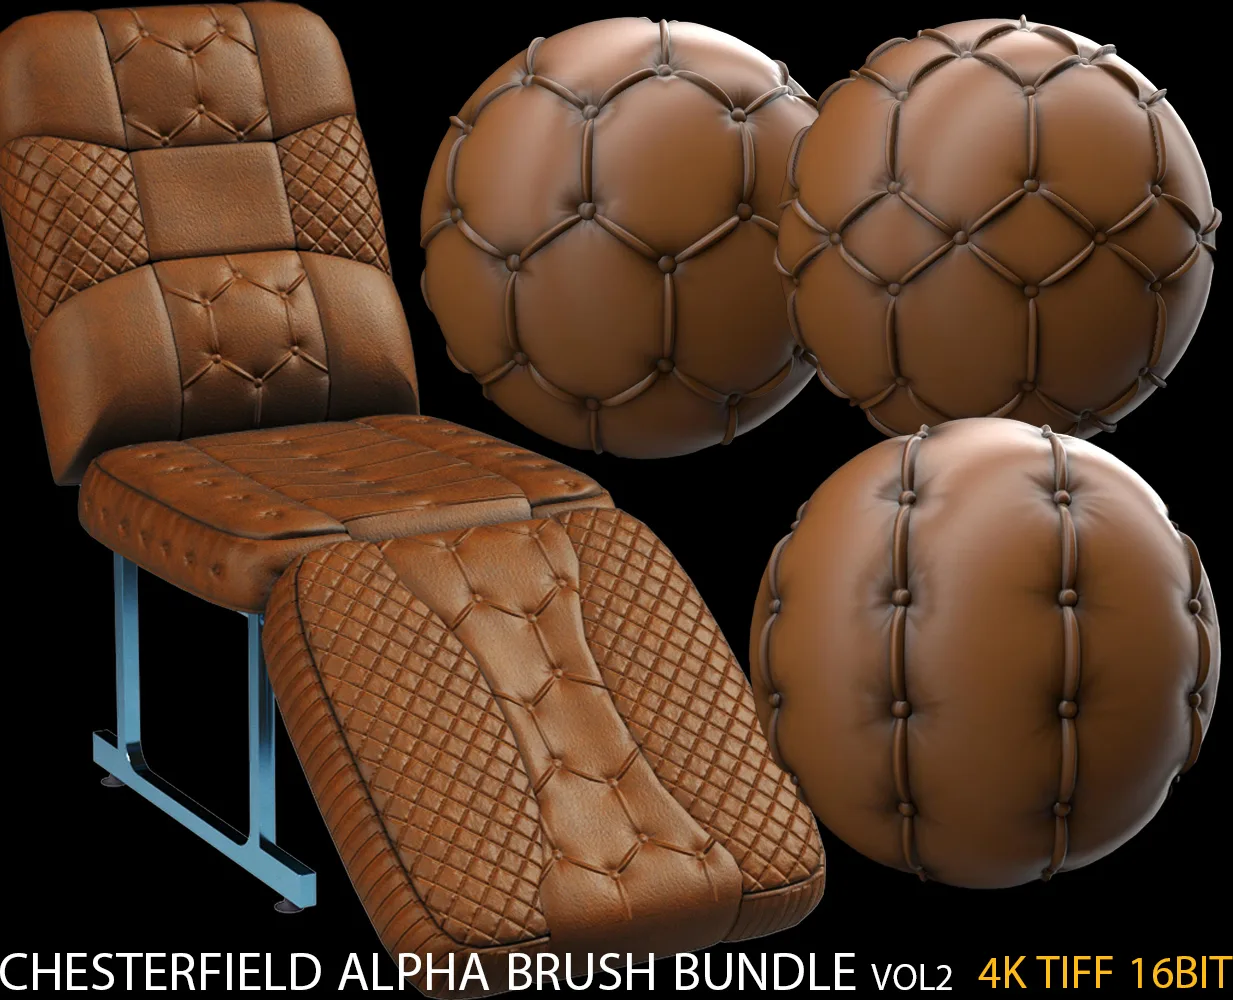 chesterfield alpha brush bundle v2